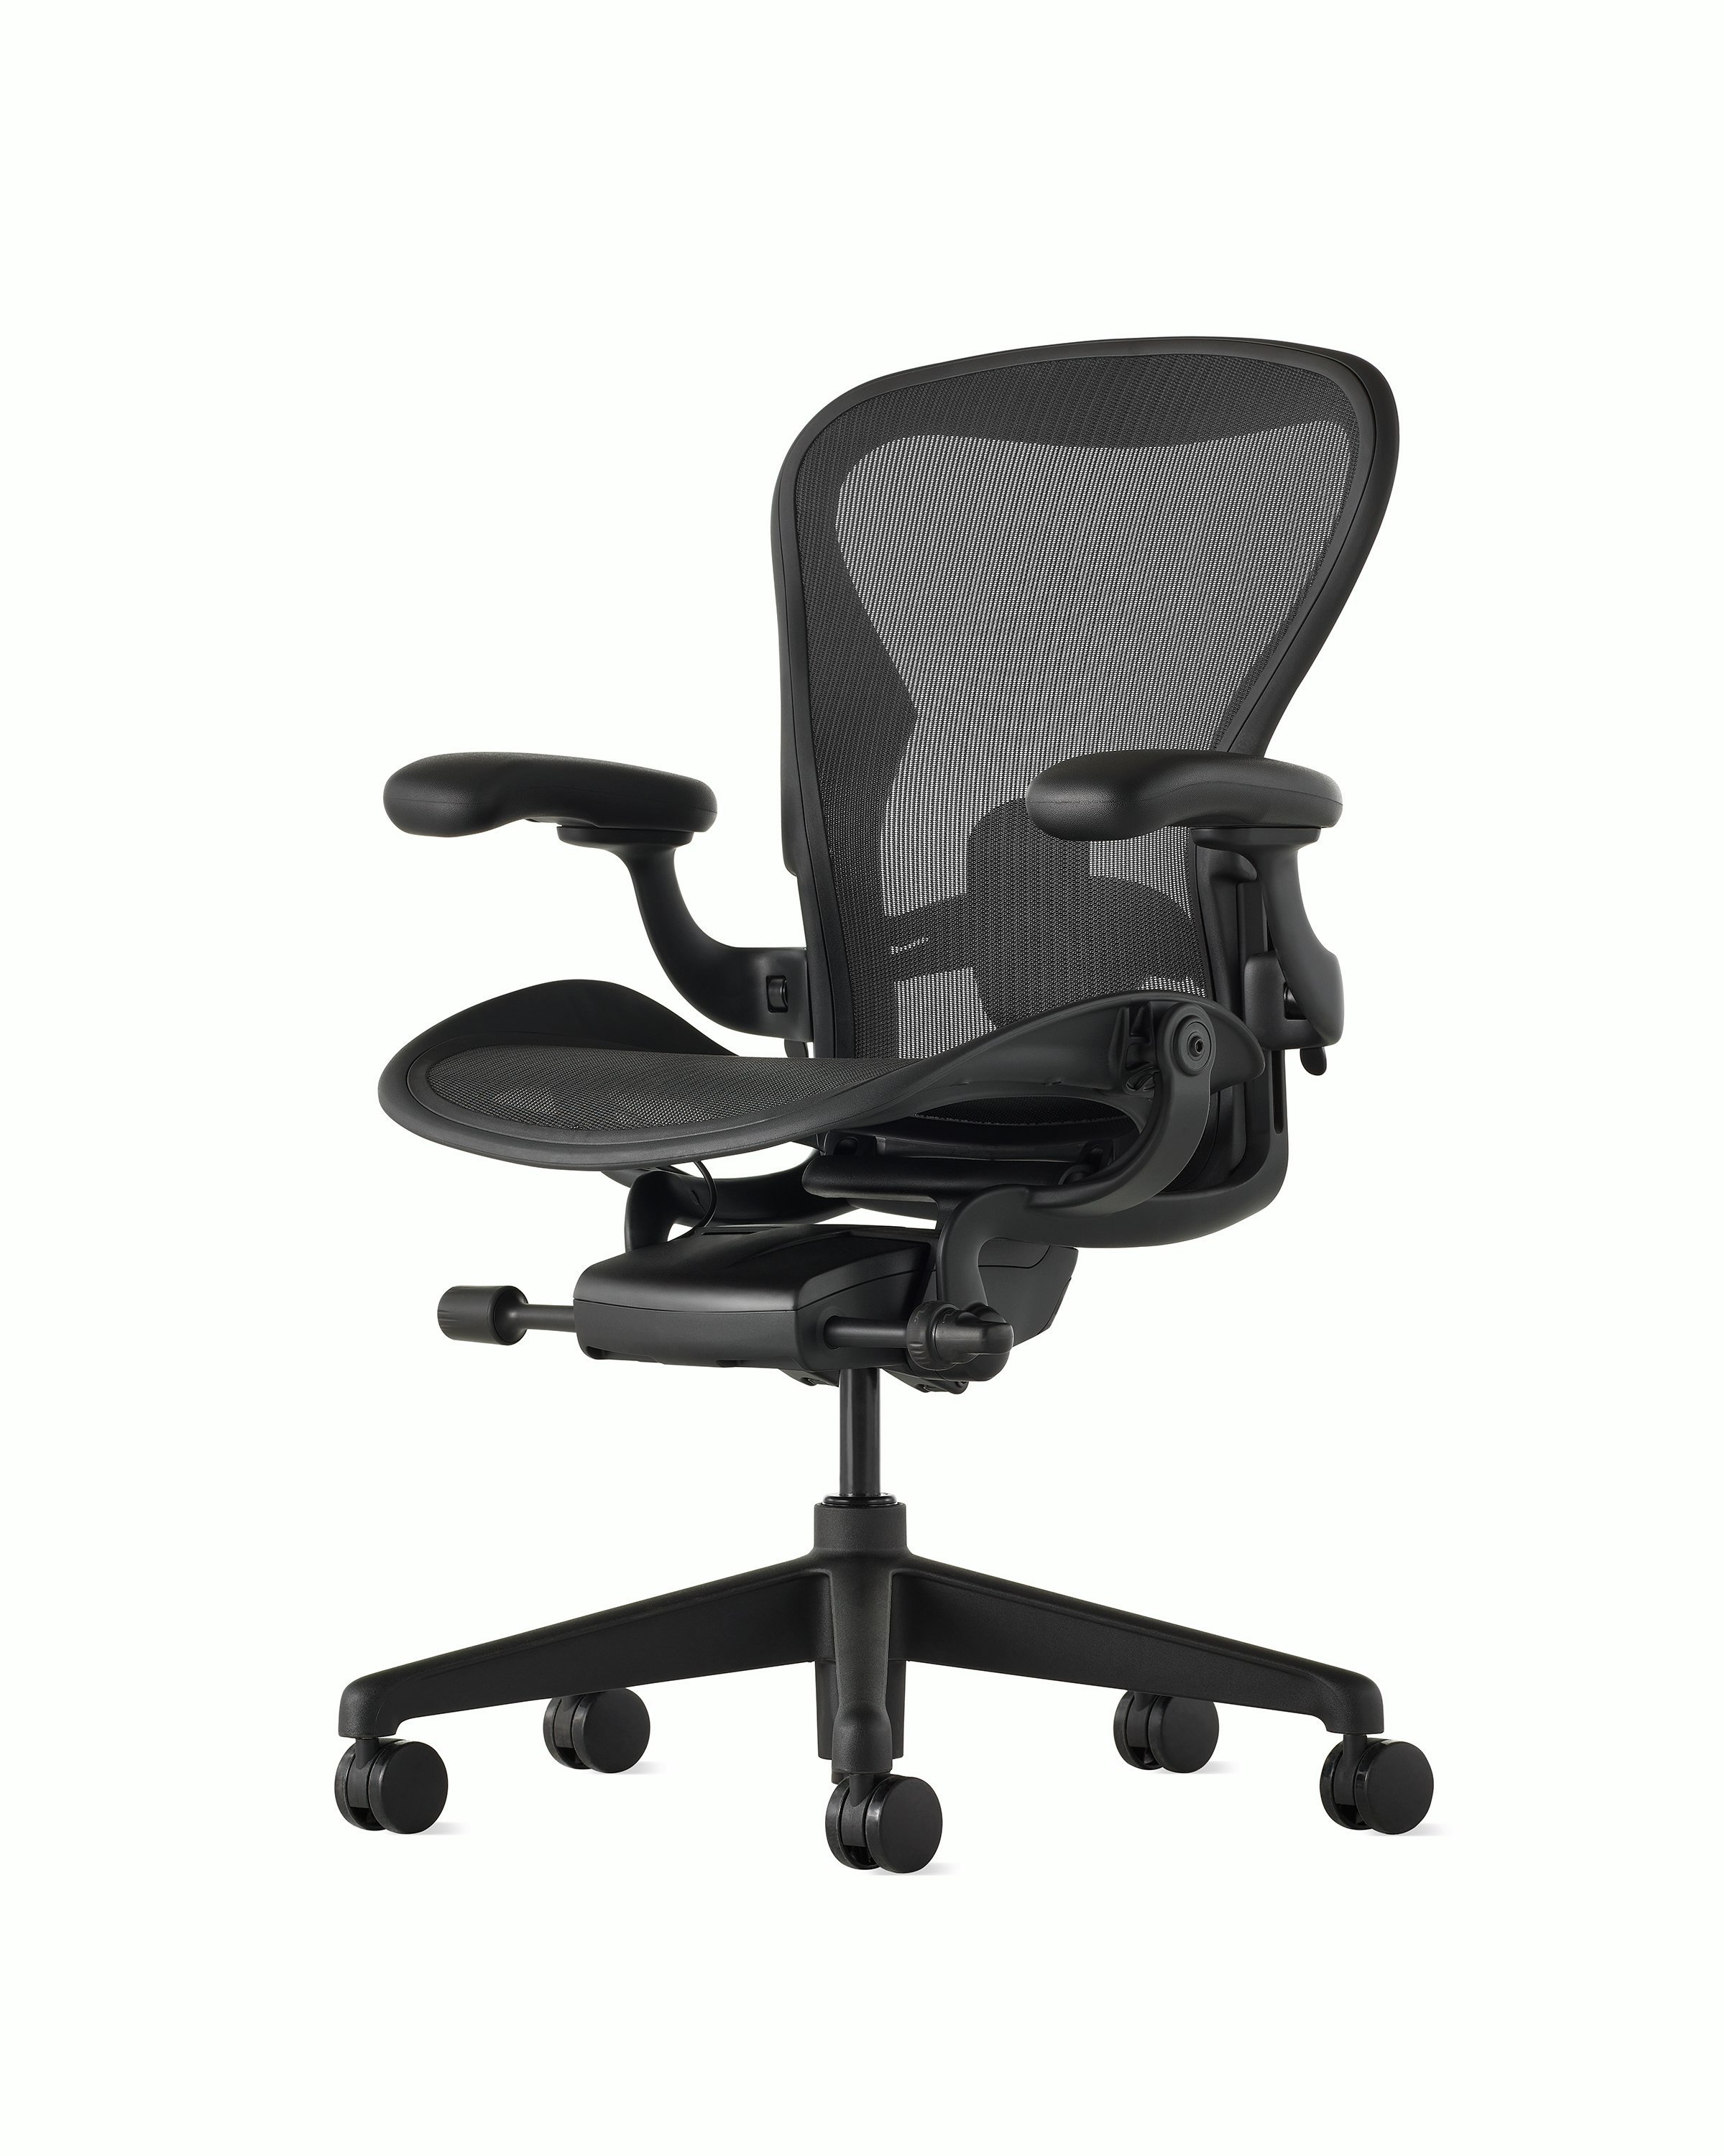 Medium Lumbar Support Pad for Herman Miller Aeron Chair Size B Small Tears 